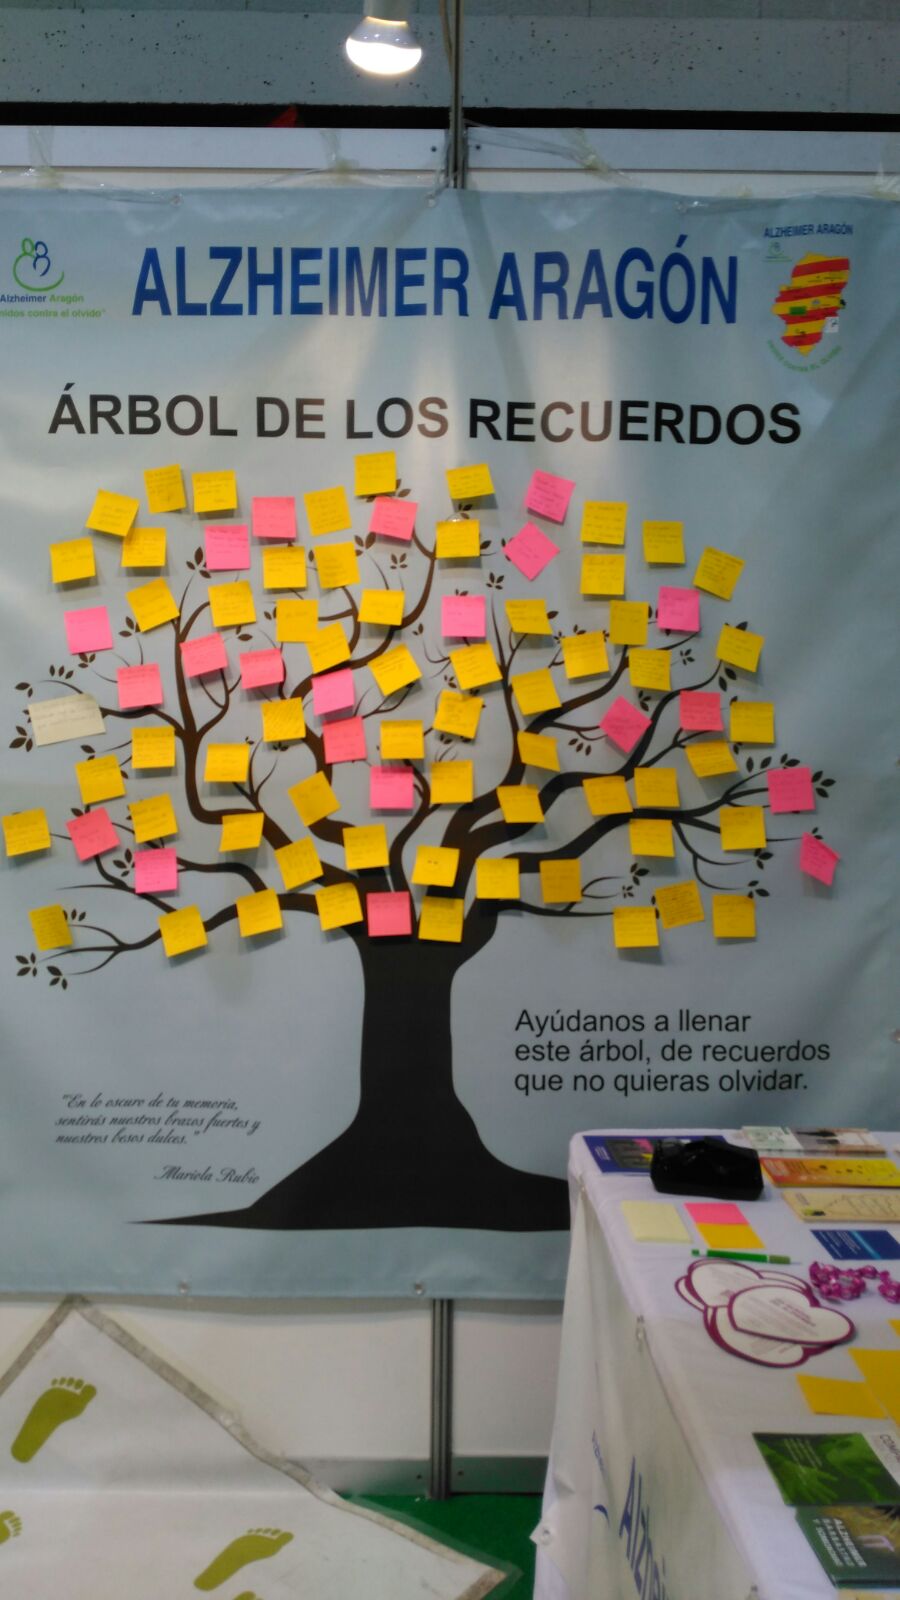 Da Mundial de Alzheimer en la provincia de Zaragoza